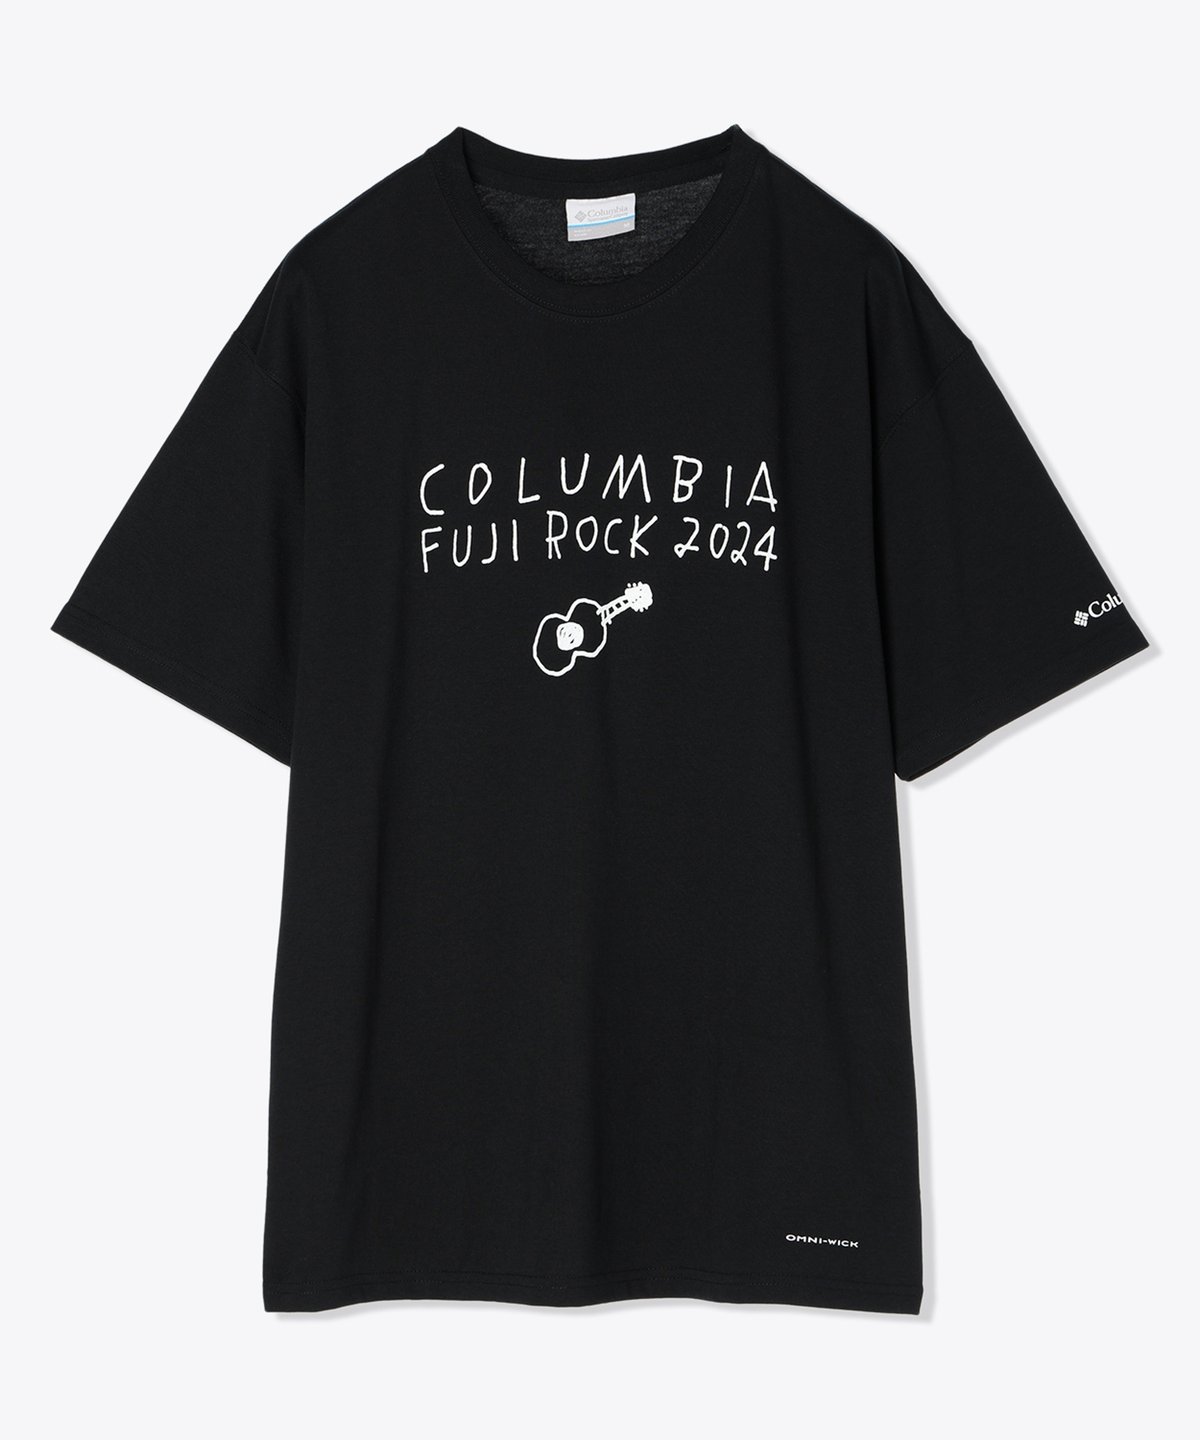 ColumbiaとFUJI ROCKのコラボTシャツ